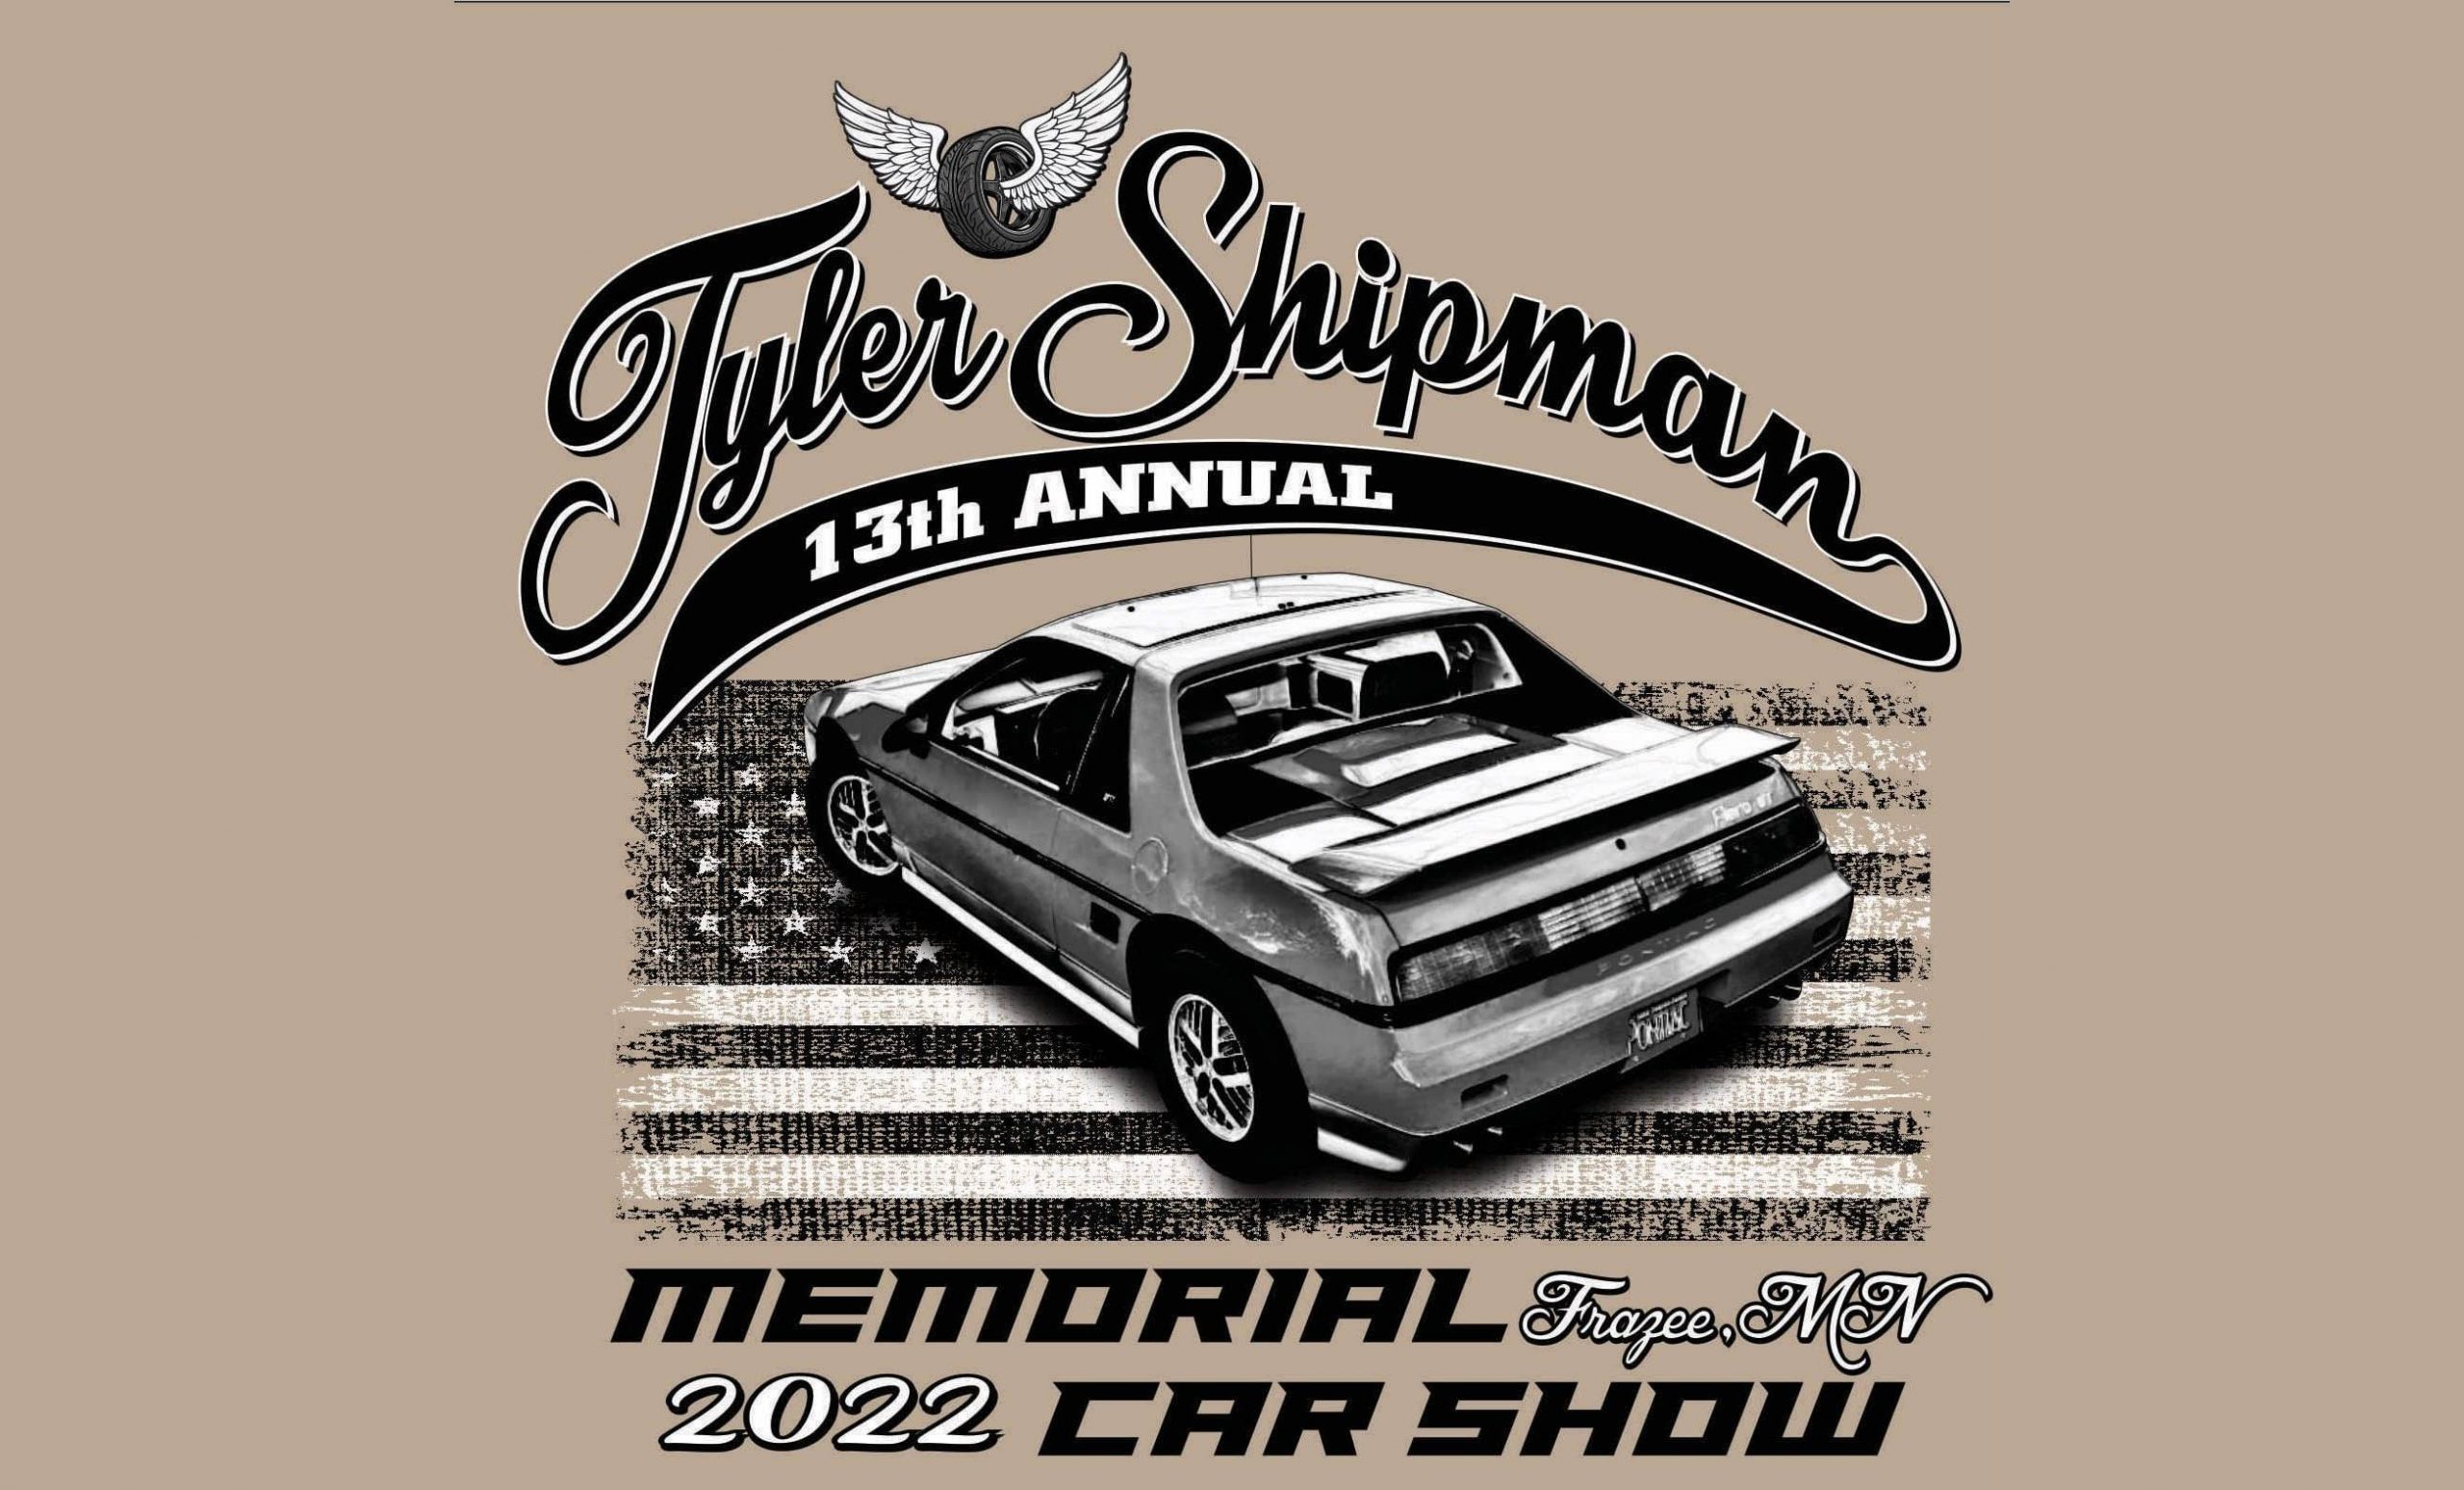 Tyler Shipman Memorial Car Show 2022